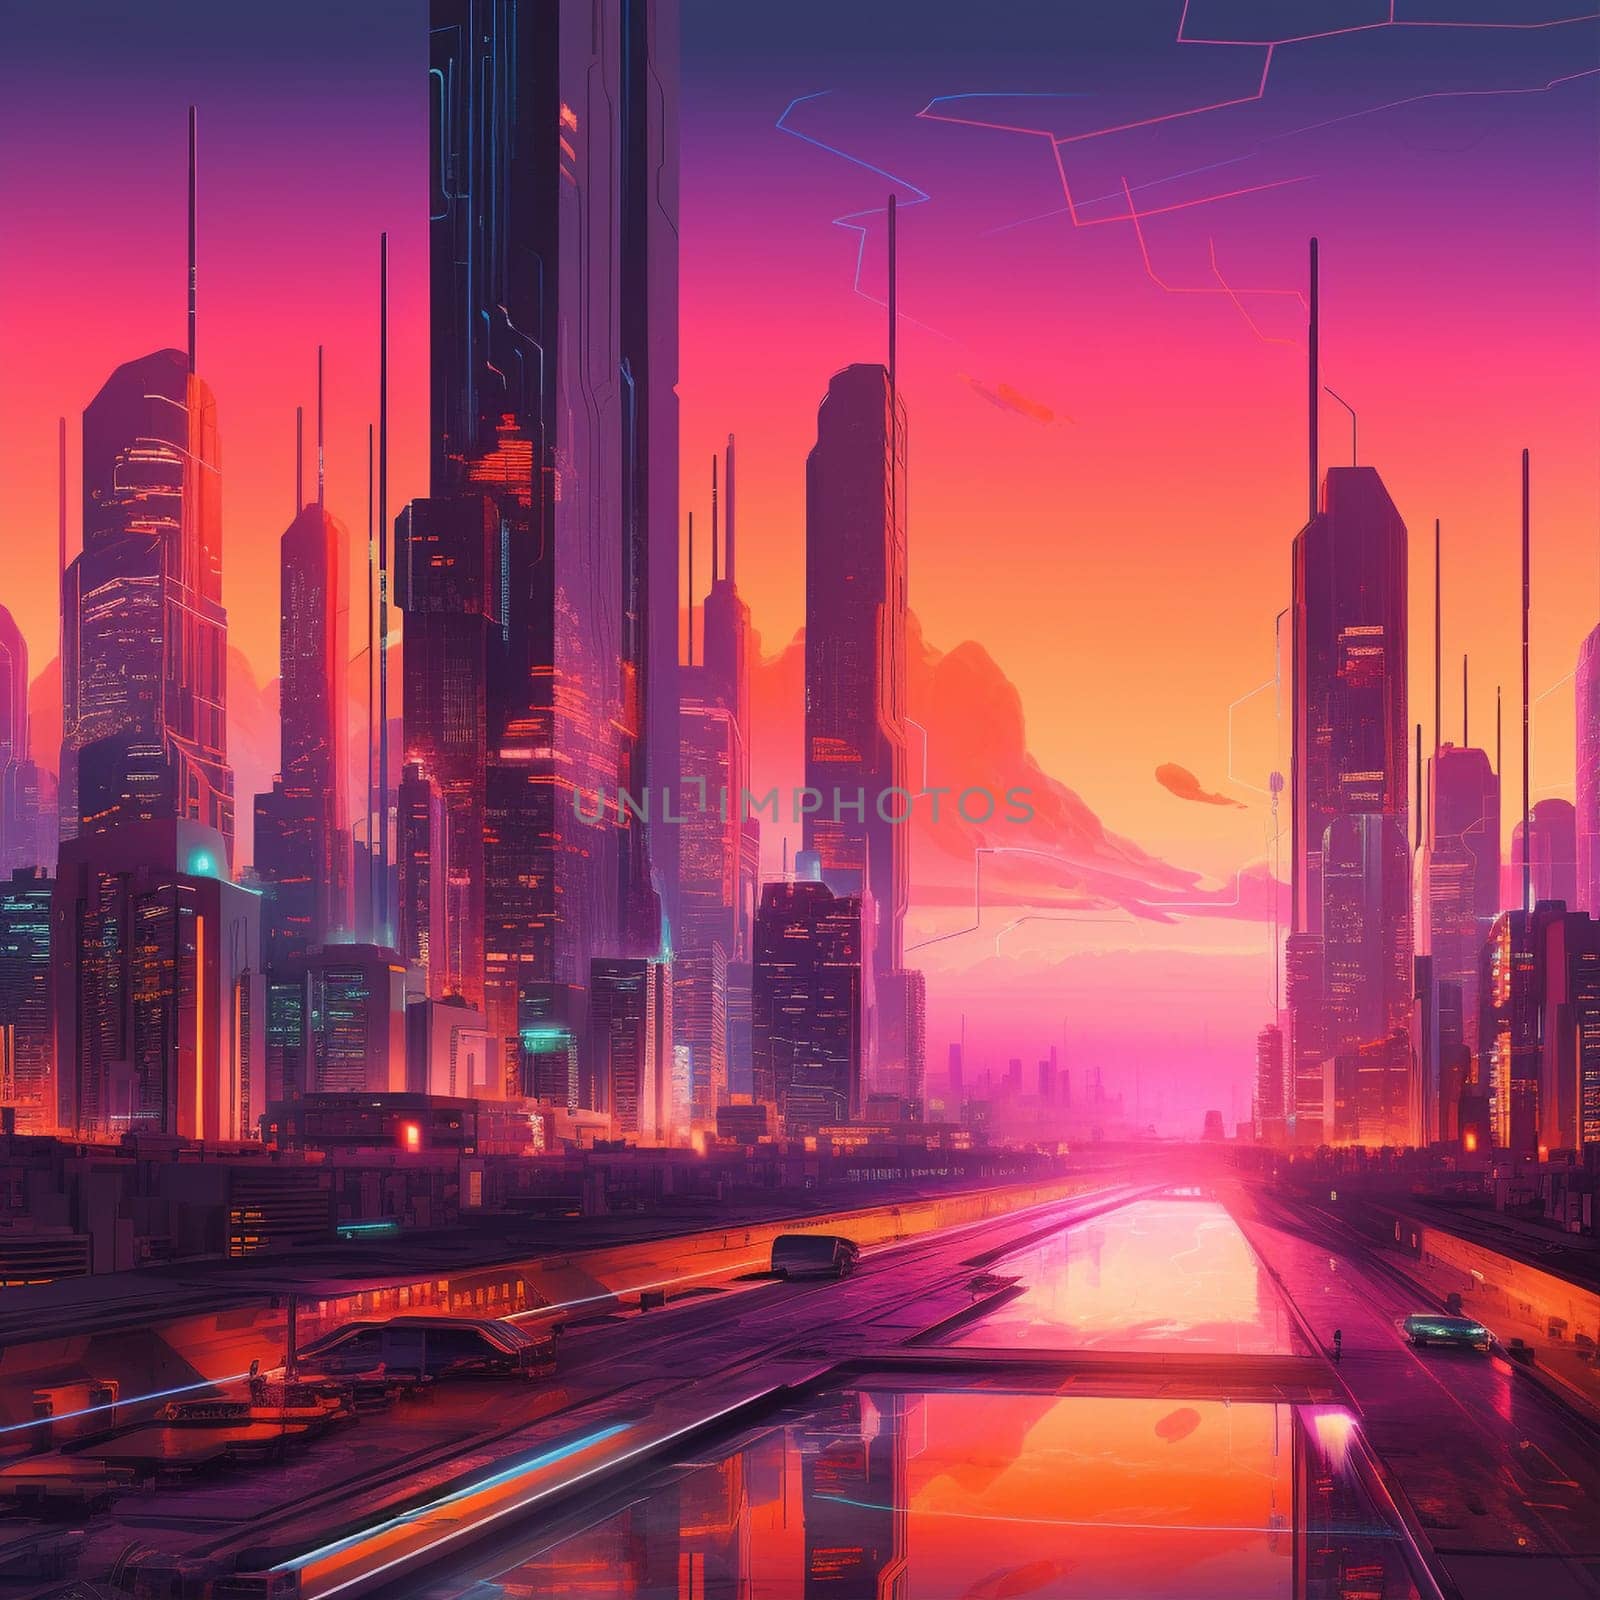 Futuristic City at Dawn by Sahin